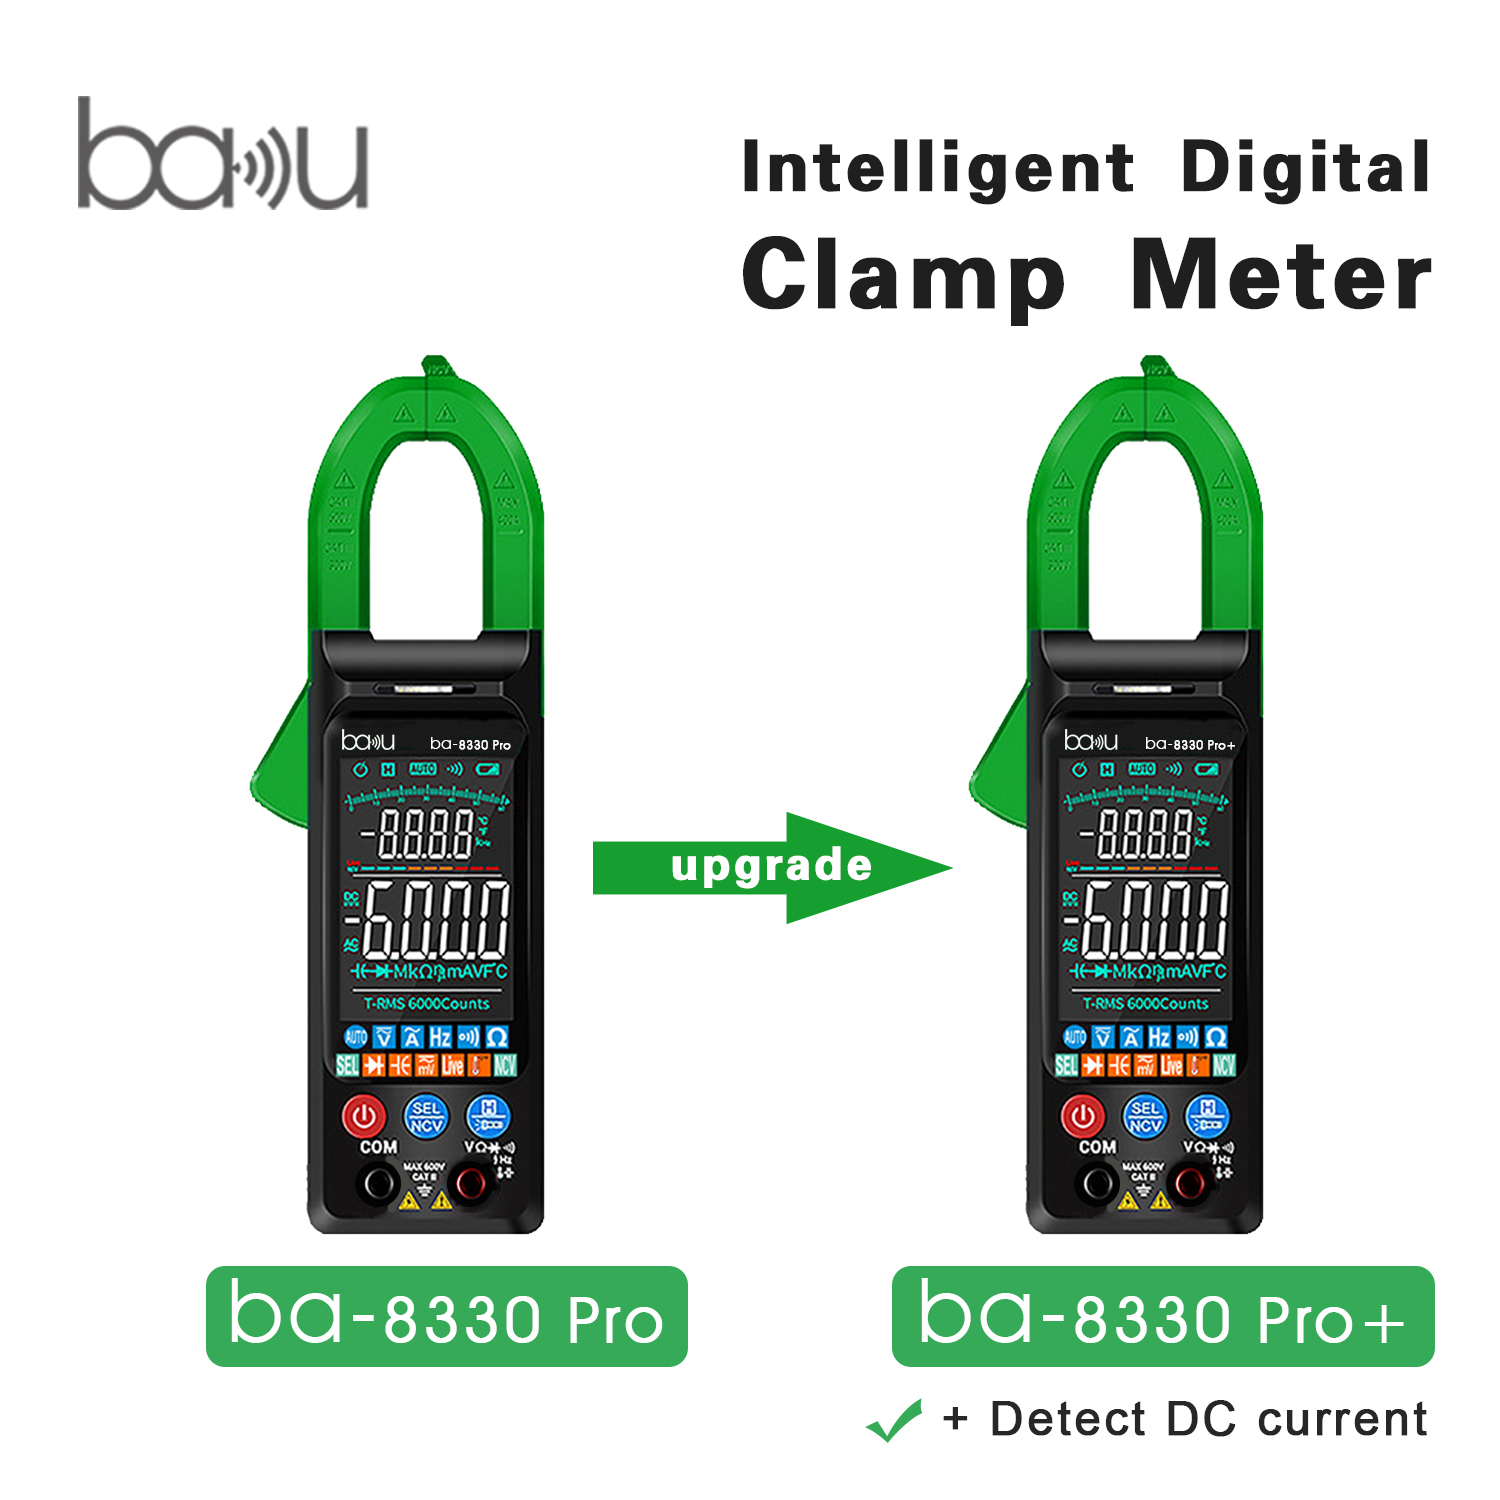 NEW product BAKU ba-8330 Pro intelligent Digital Clamp Meter BIG Screen